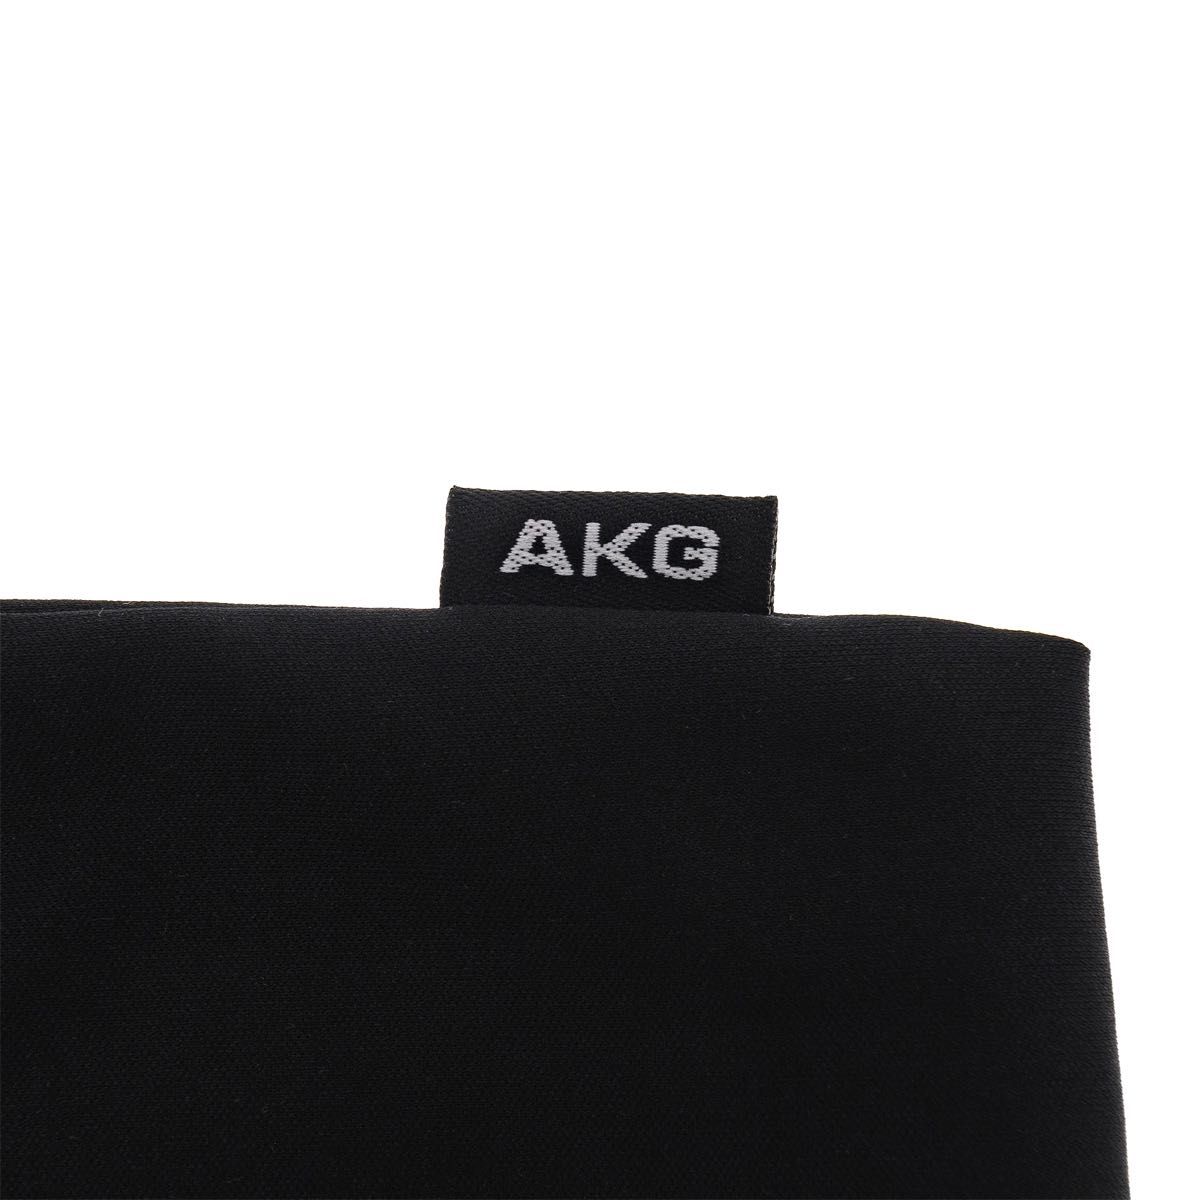 AKG 密閉型オンイヤーヘッドホン K414P 付属専用キャリングバッグ ポーチ 黒